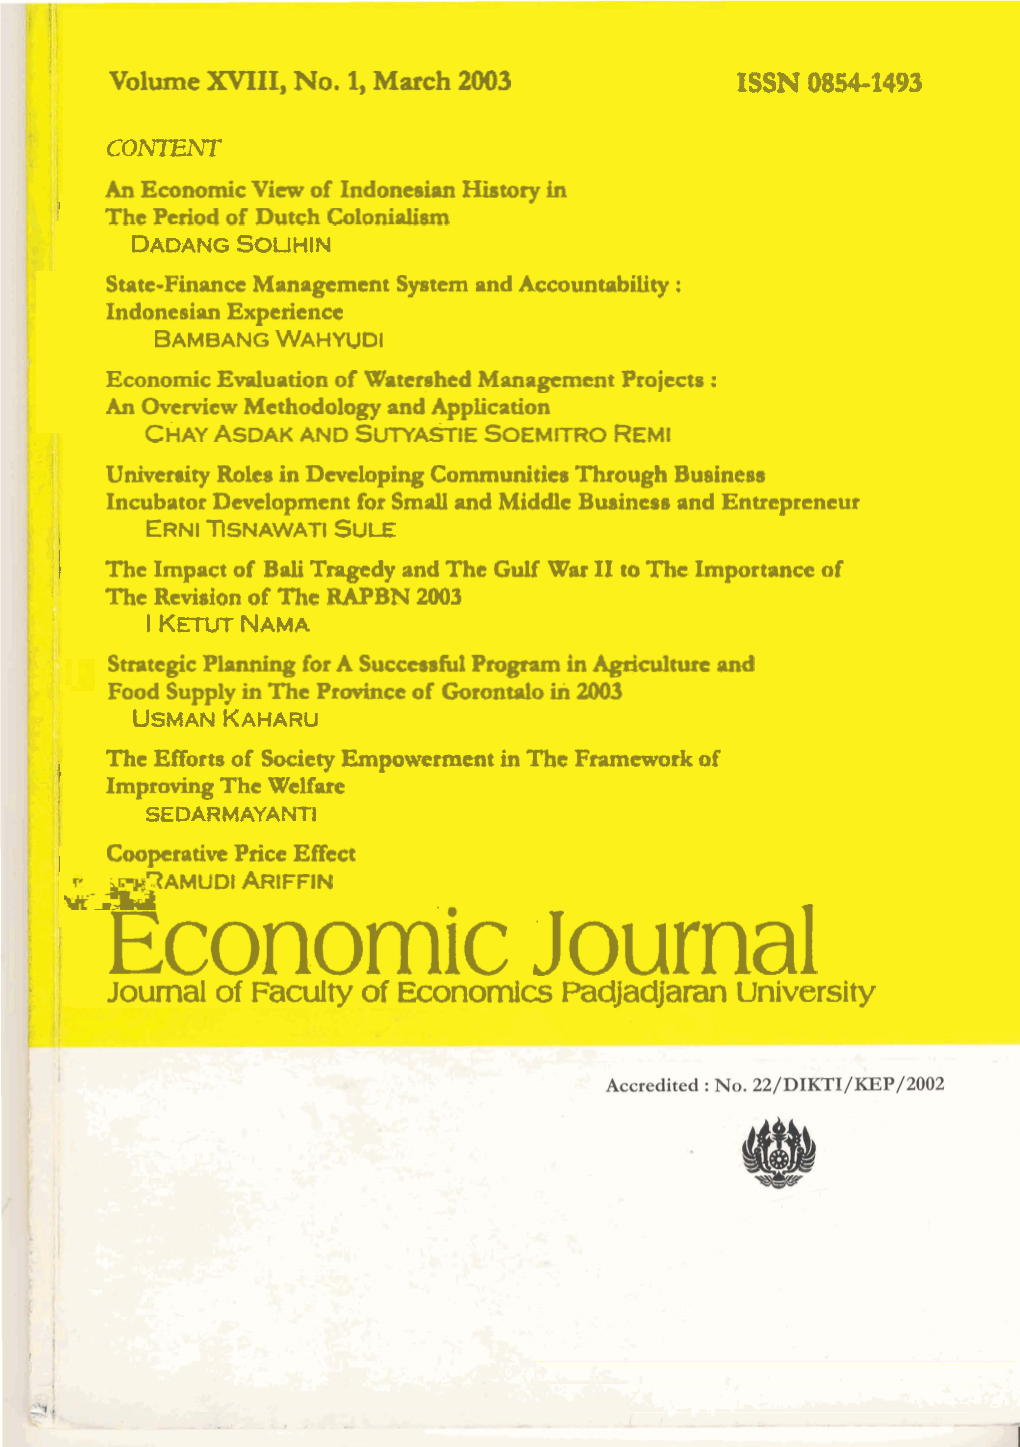 1Economic Journal Journal of Faculty of Economics Padfadjaran University